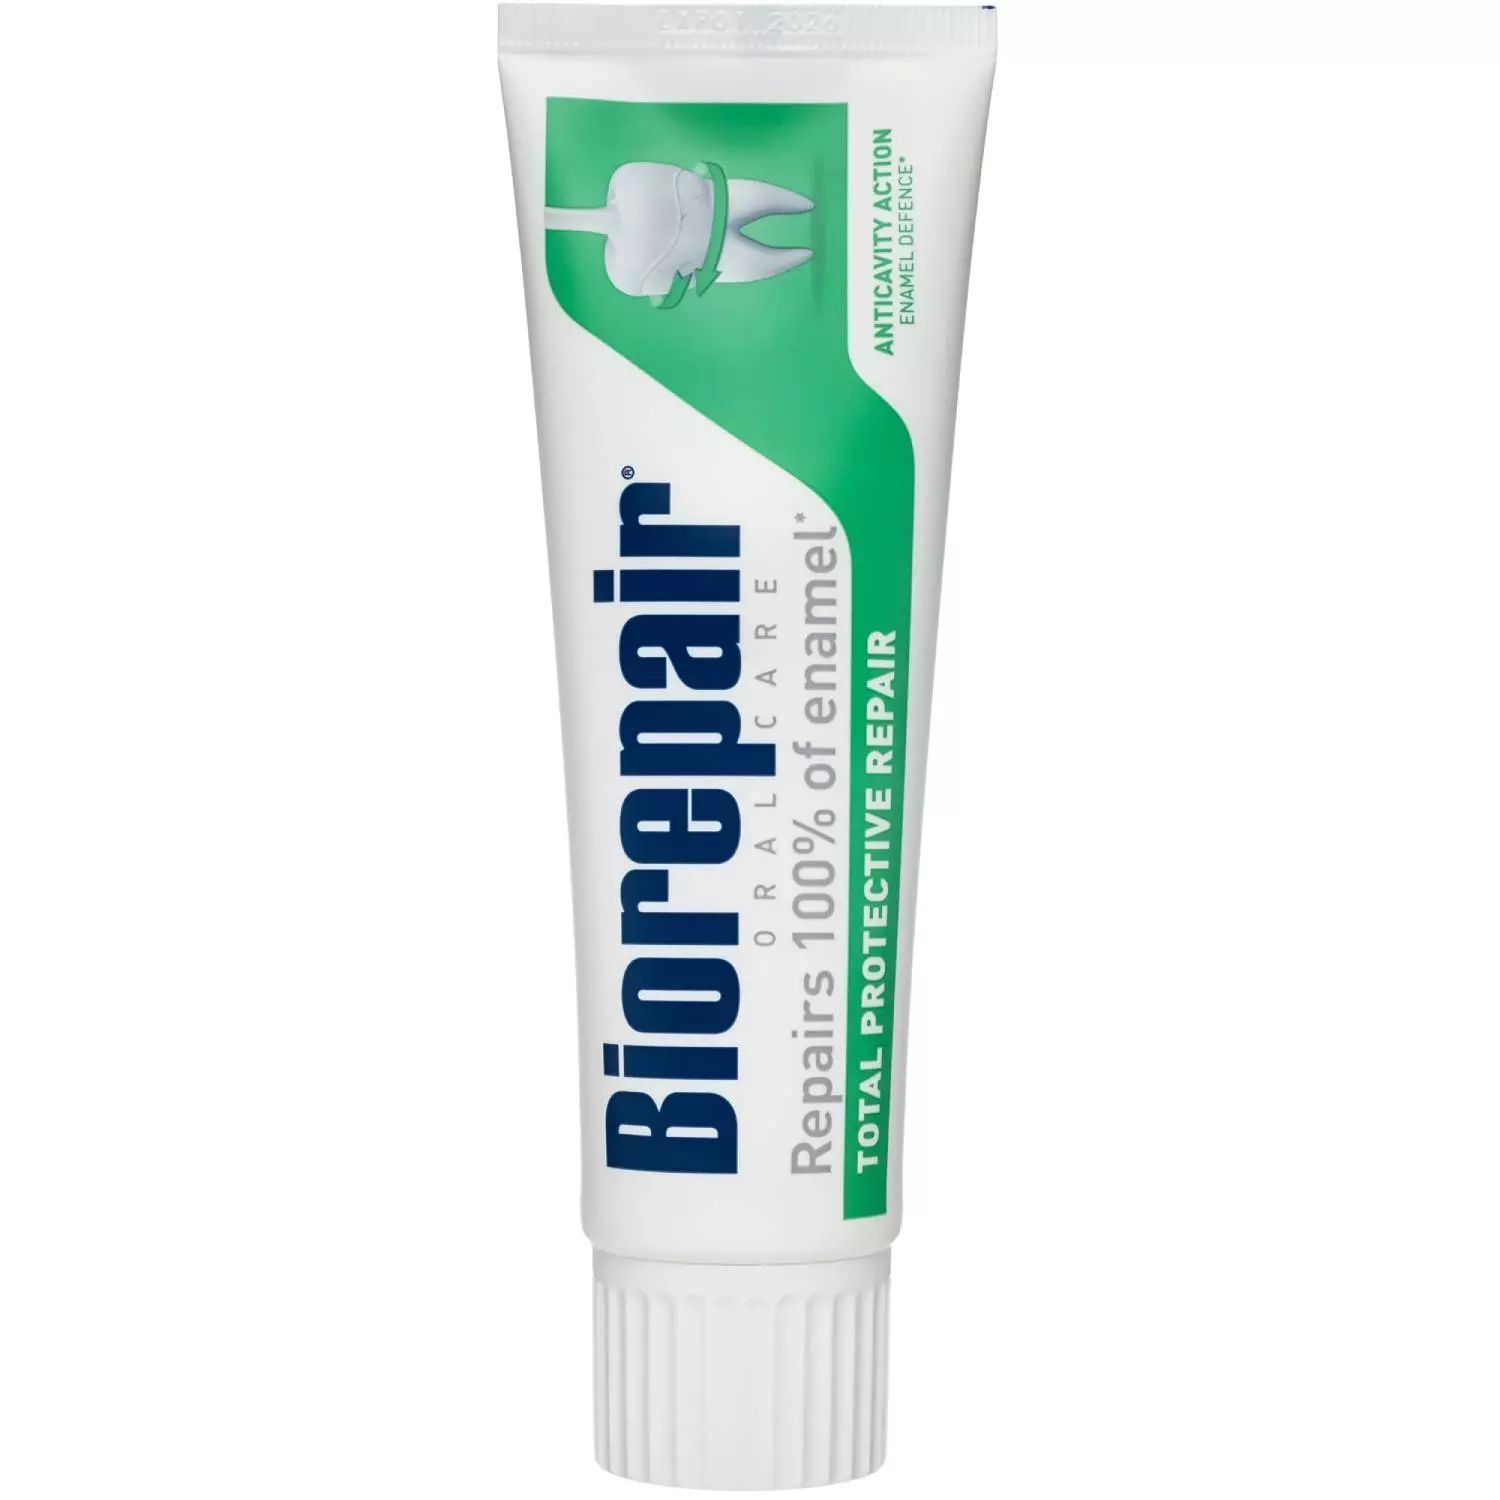 Зубная паста Biorepair Total Protective Repair 75 мл biorepair паста зубная комплексная защита total protective repair 75 мл